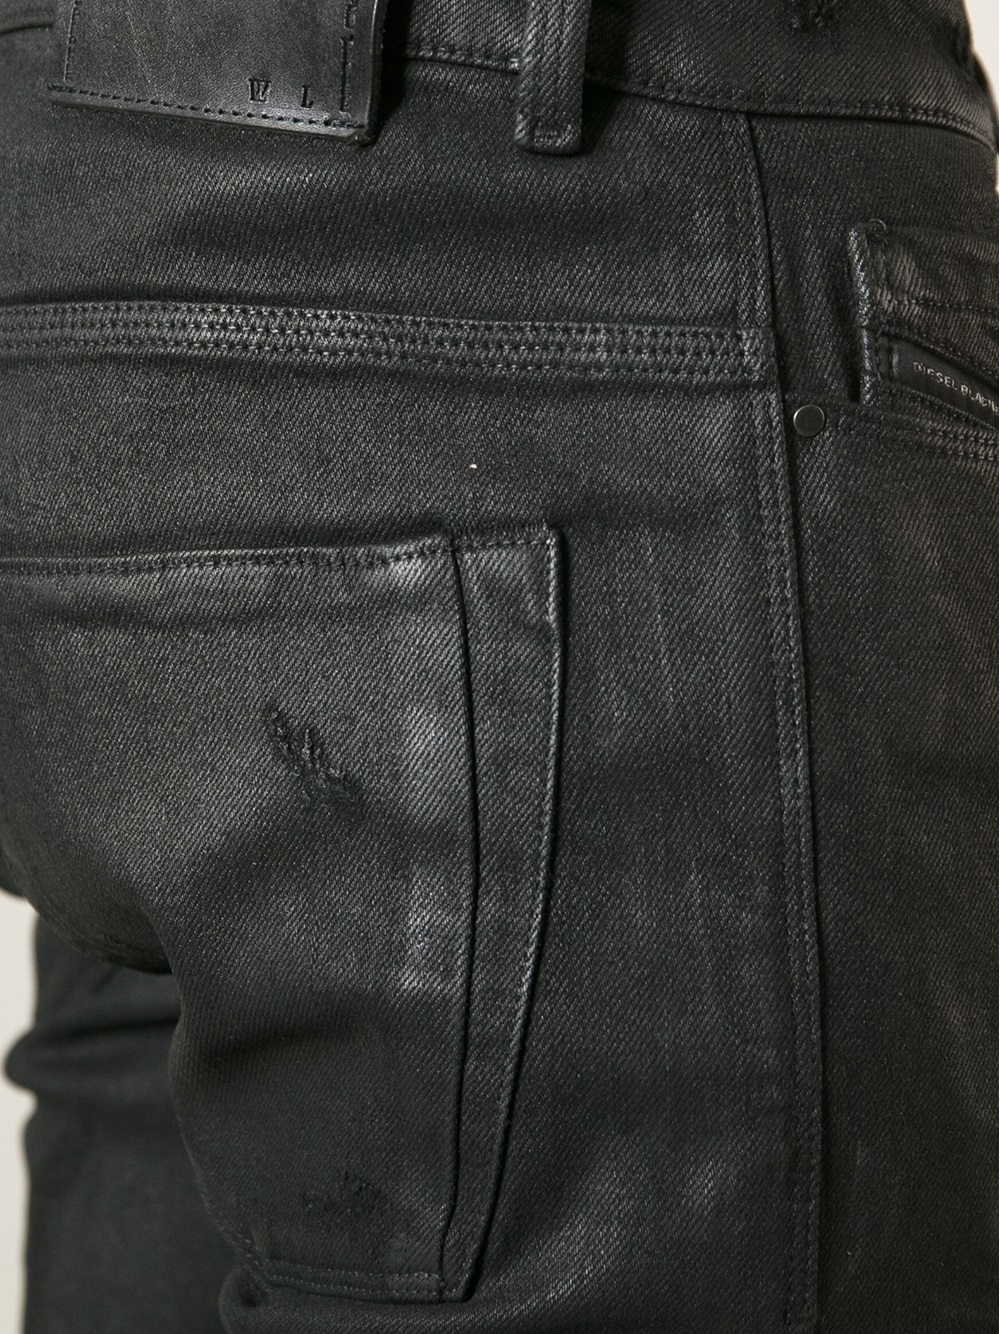 Lyst - Diesel Black Gold Skinny Jeans in Black for Men